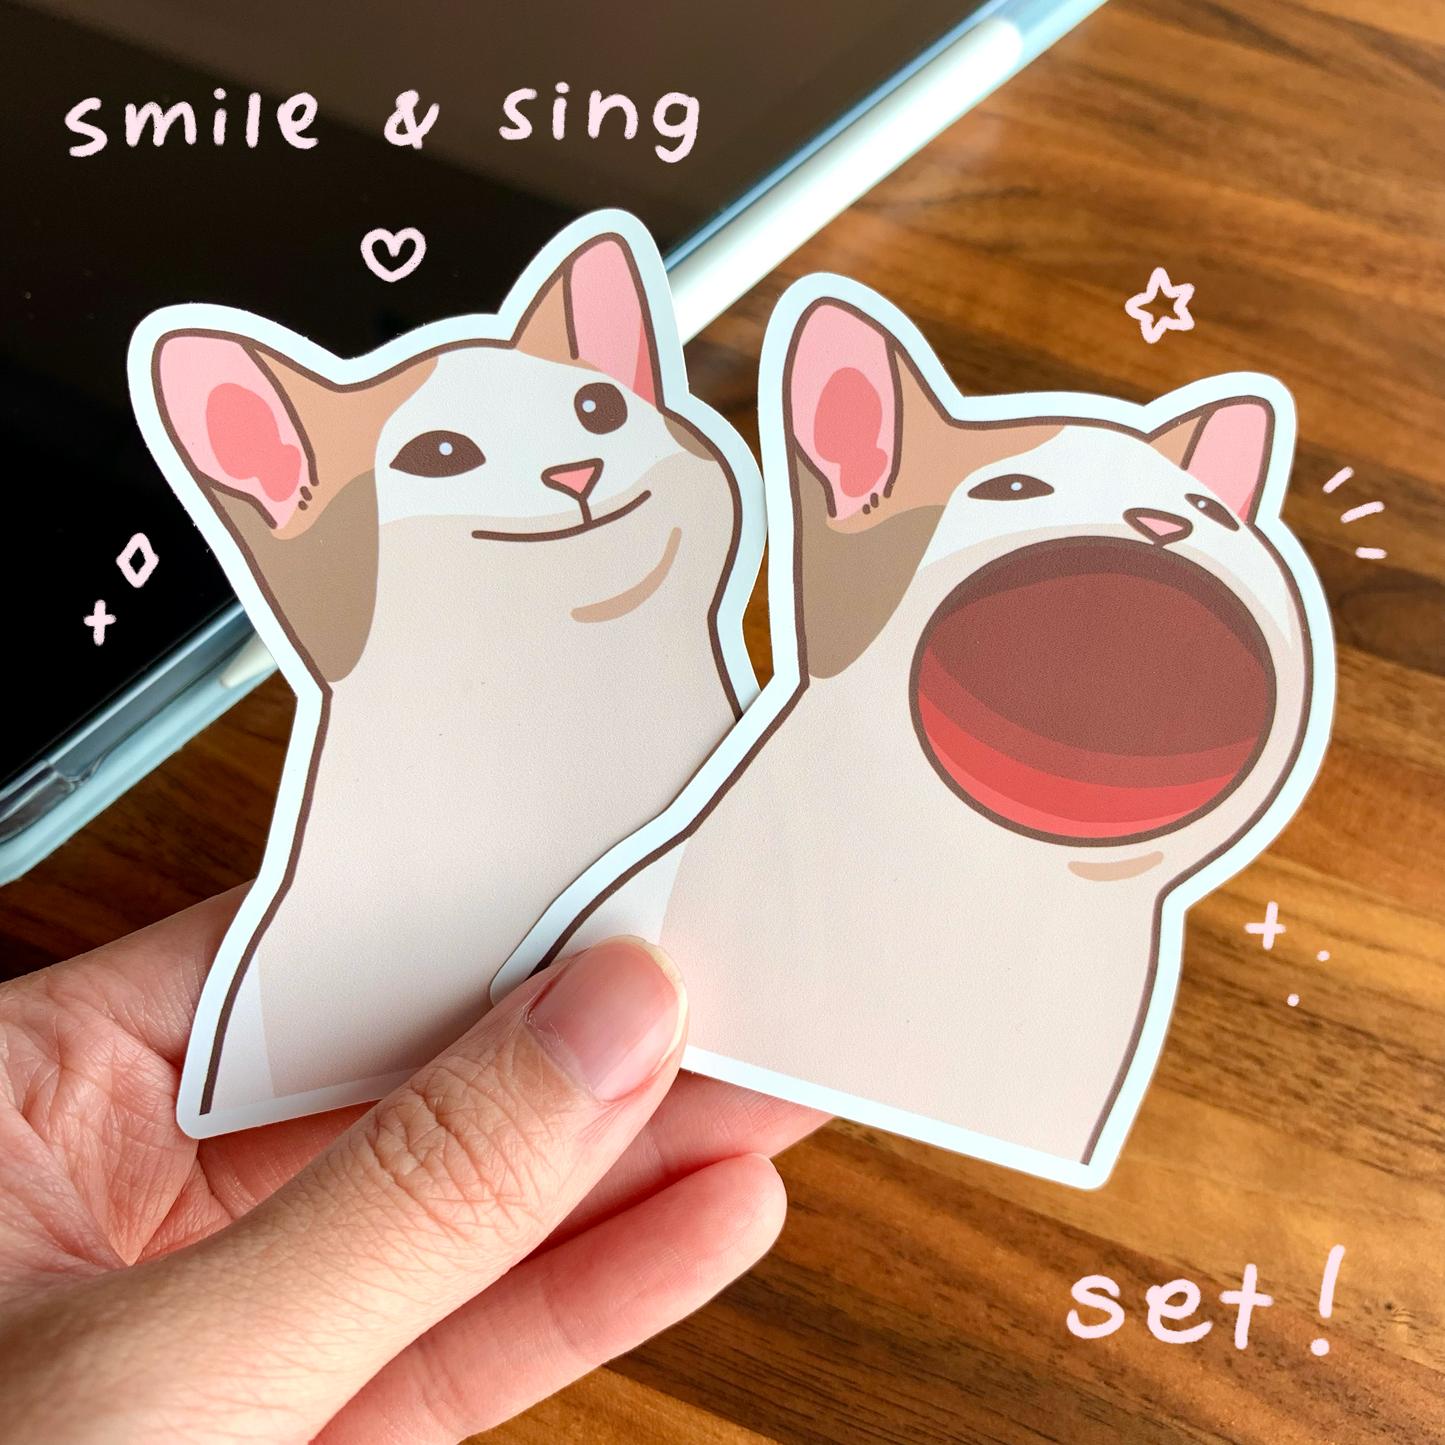 Pop Cat Stickers